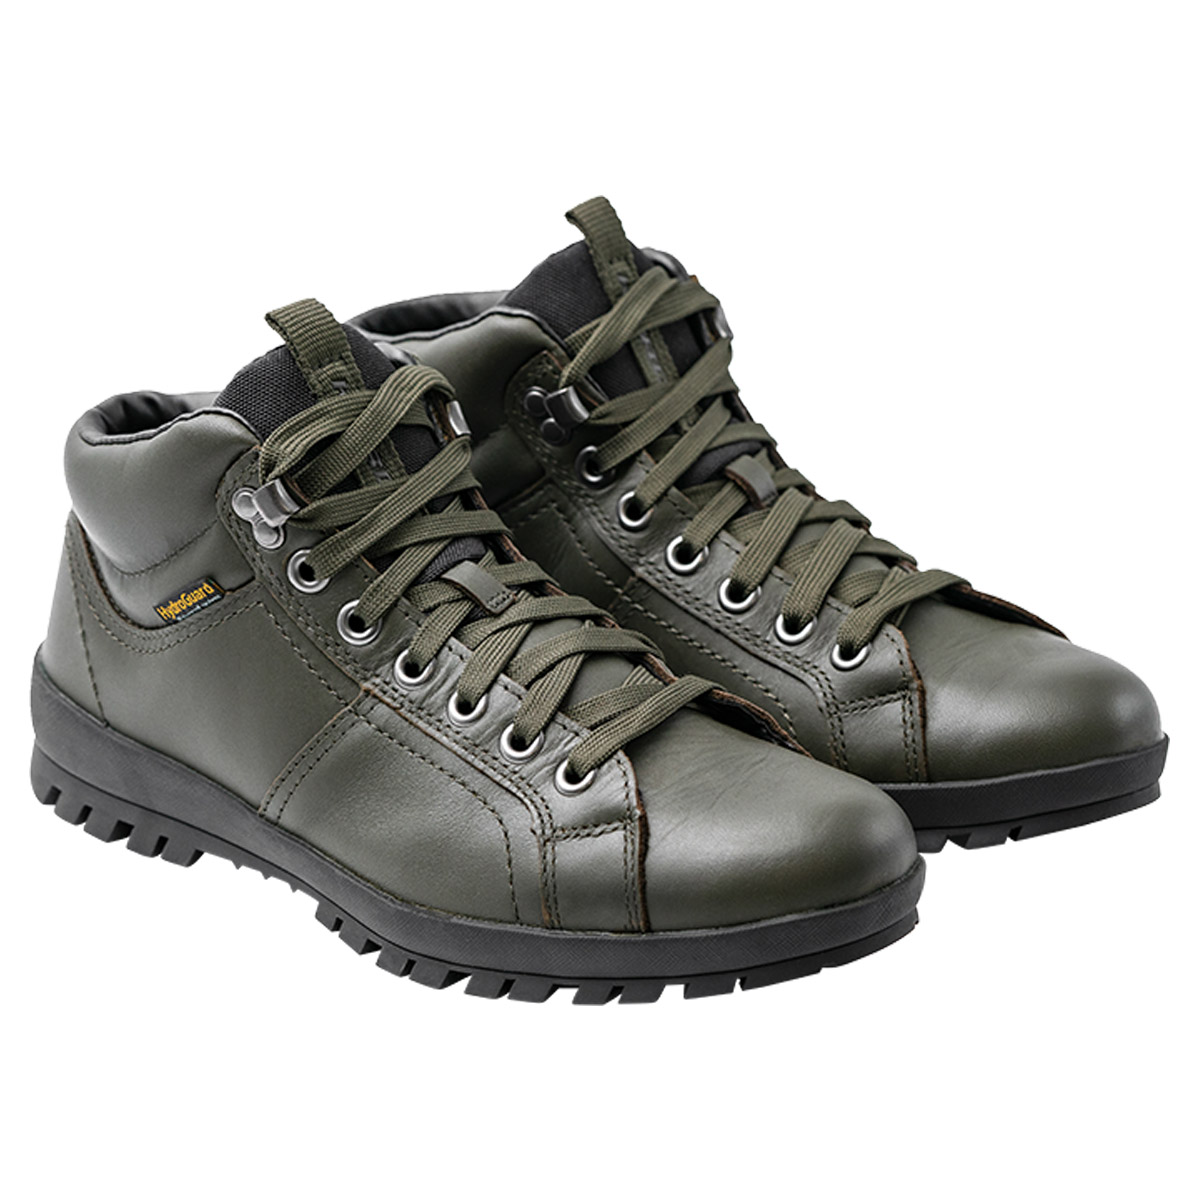 Korda Kore Kombat Boots Olive -  8 / 42 -  11 / 46 -  9 / 43 -  12 / 47 -  10 / 44.5 -  7 / 40.5